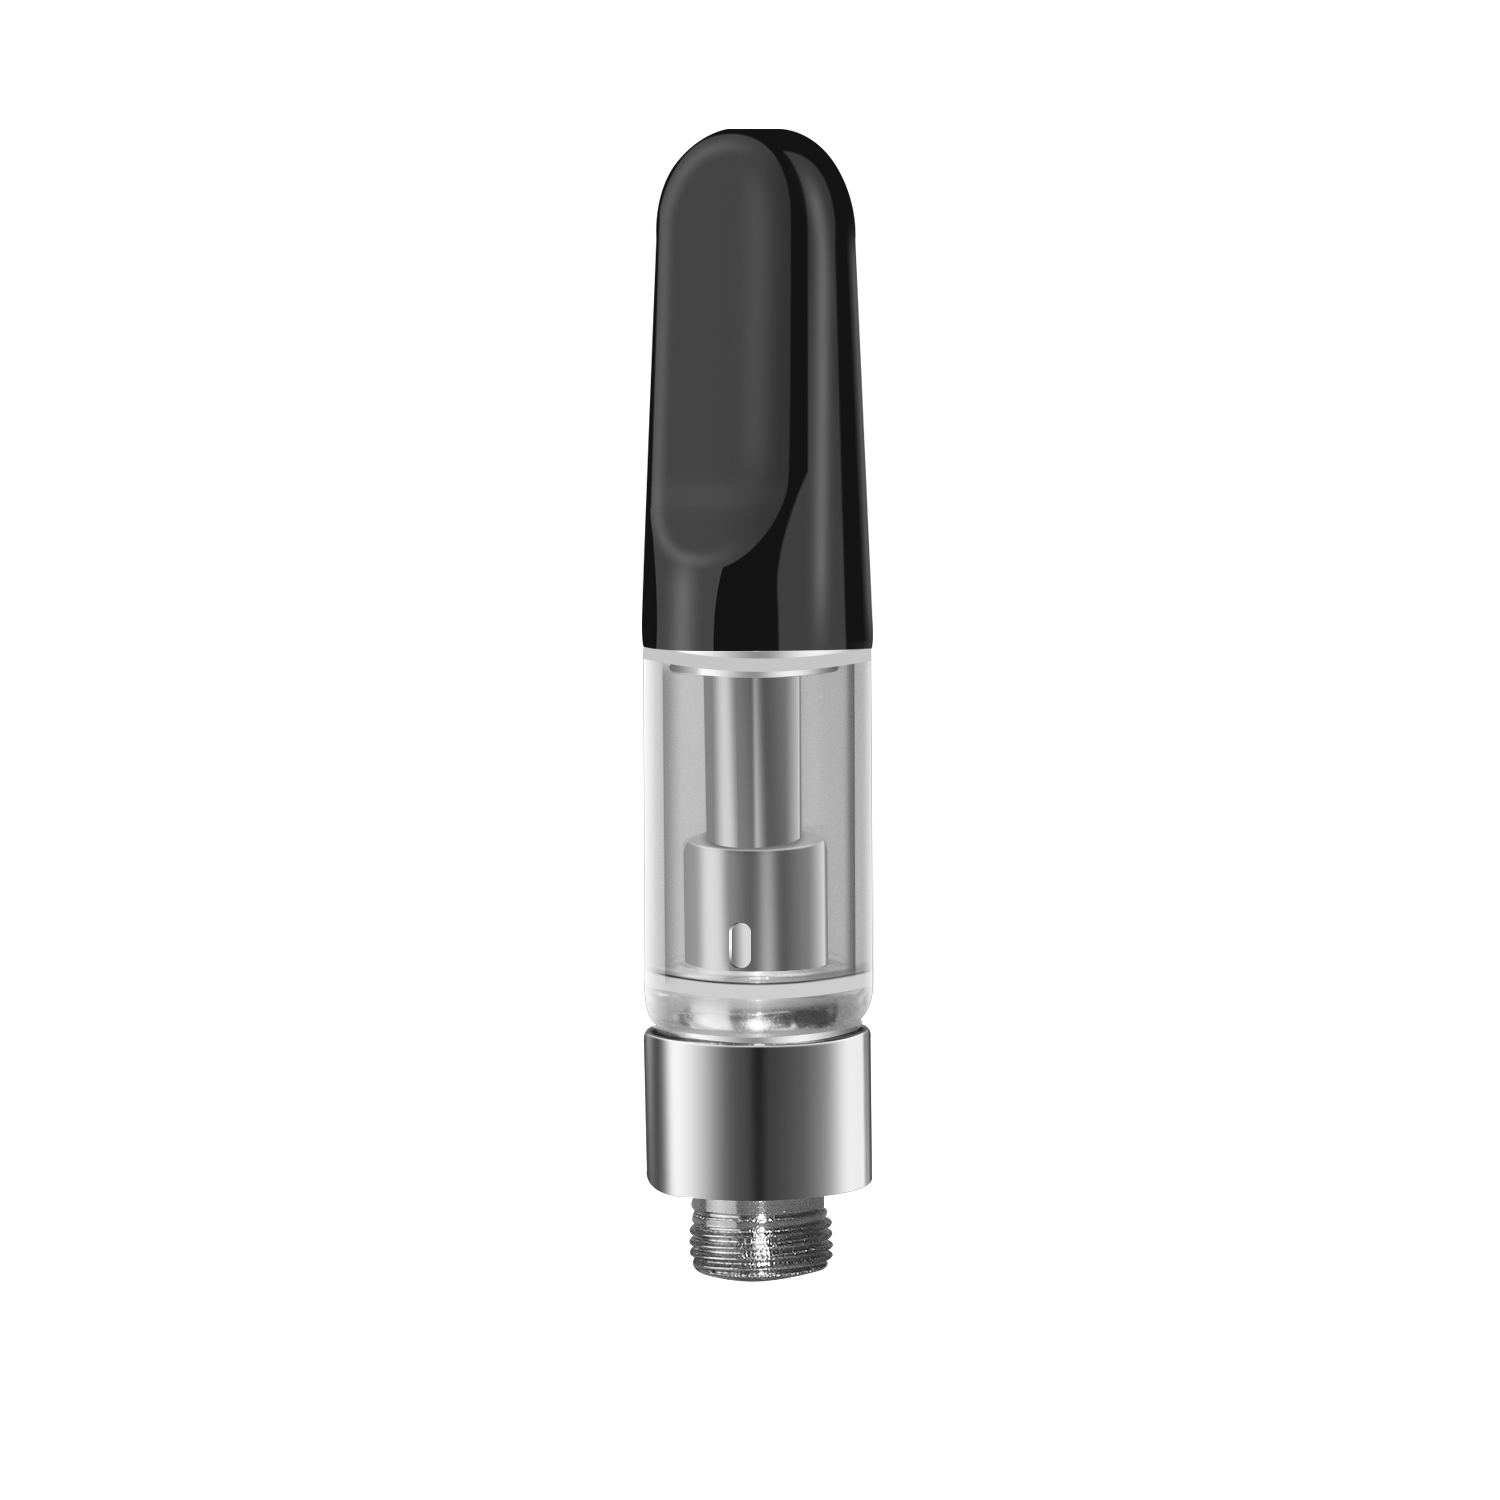 0.5 mL DM 023 510 thread vape cartridge with black ceramic tip and silver base